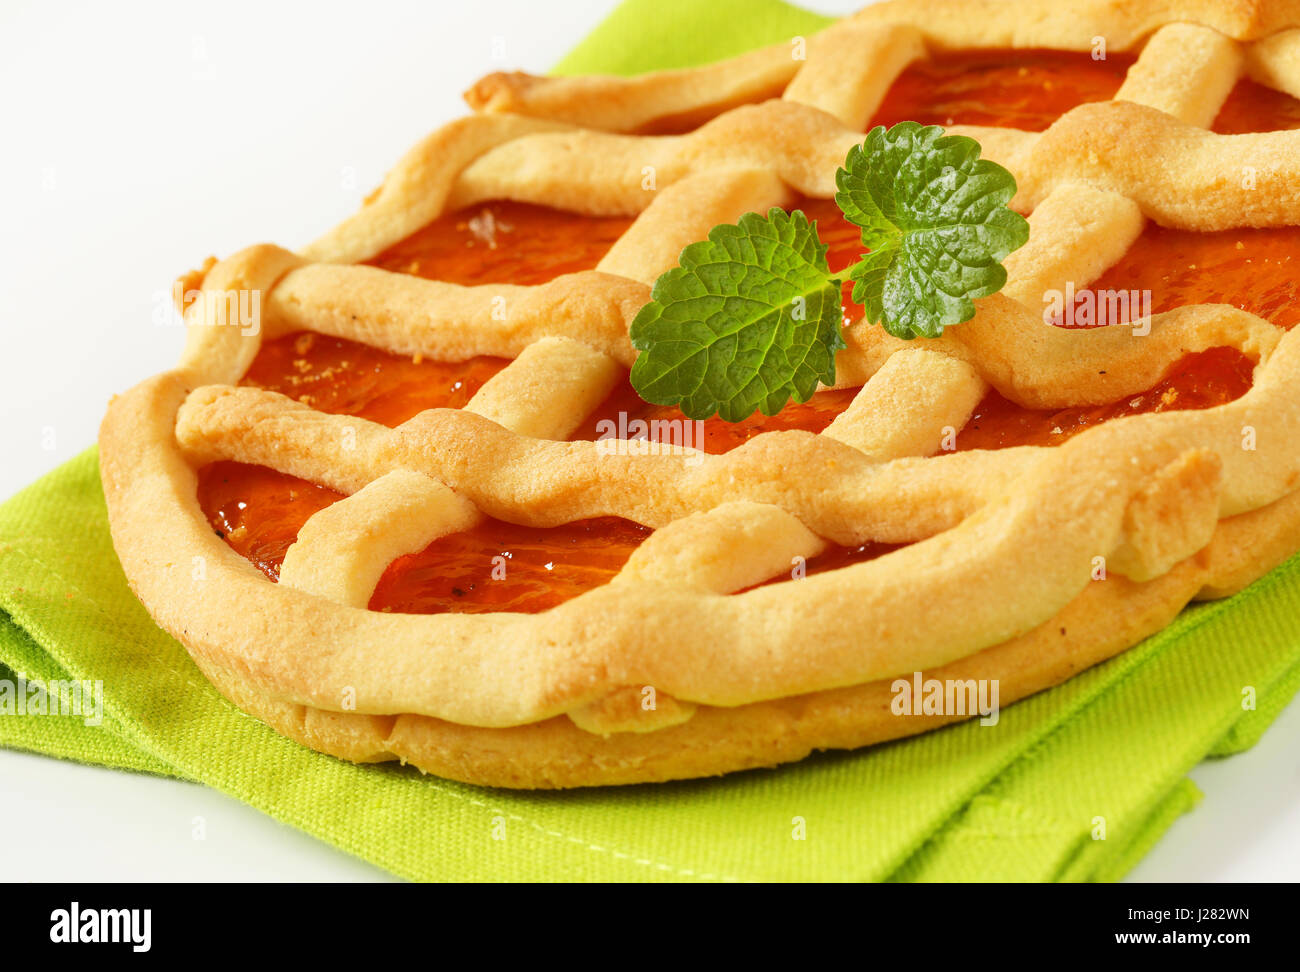 Crostata mit Marmelade oder Aprikose Marmelade-Füllung Stockfoto